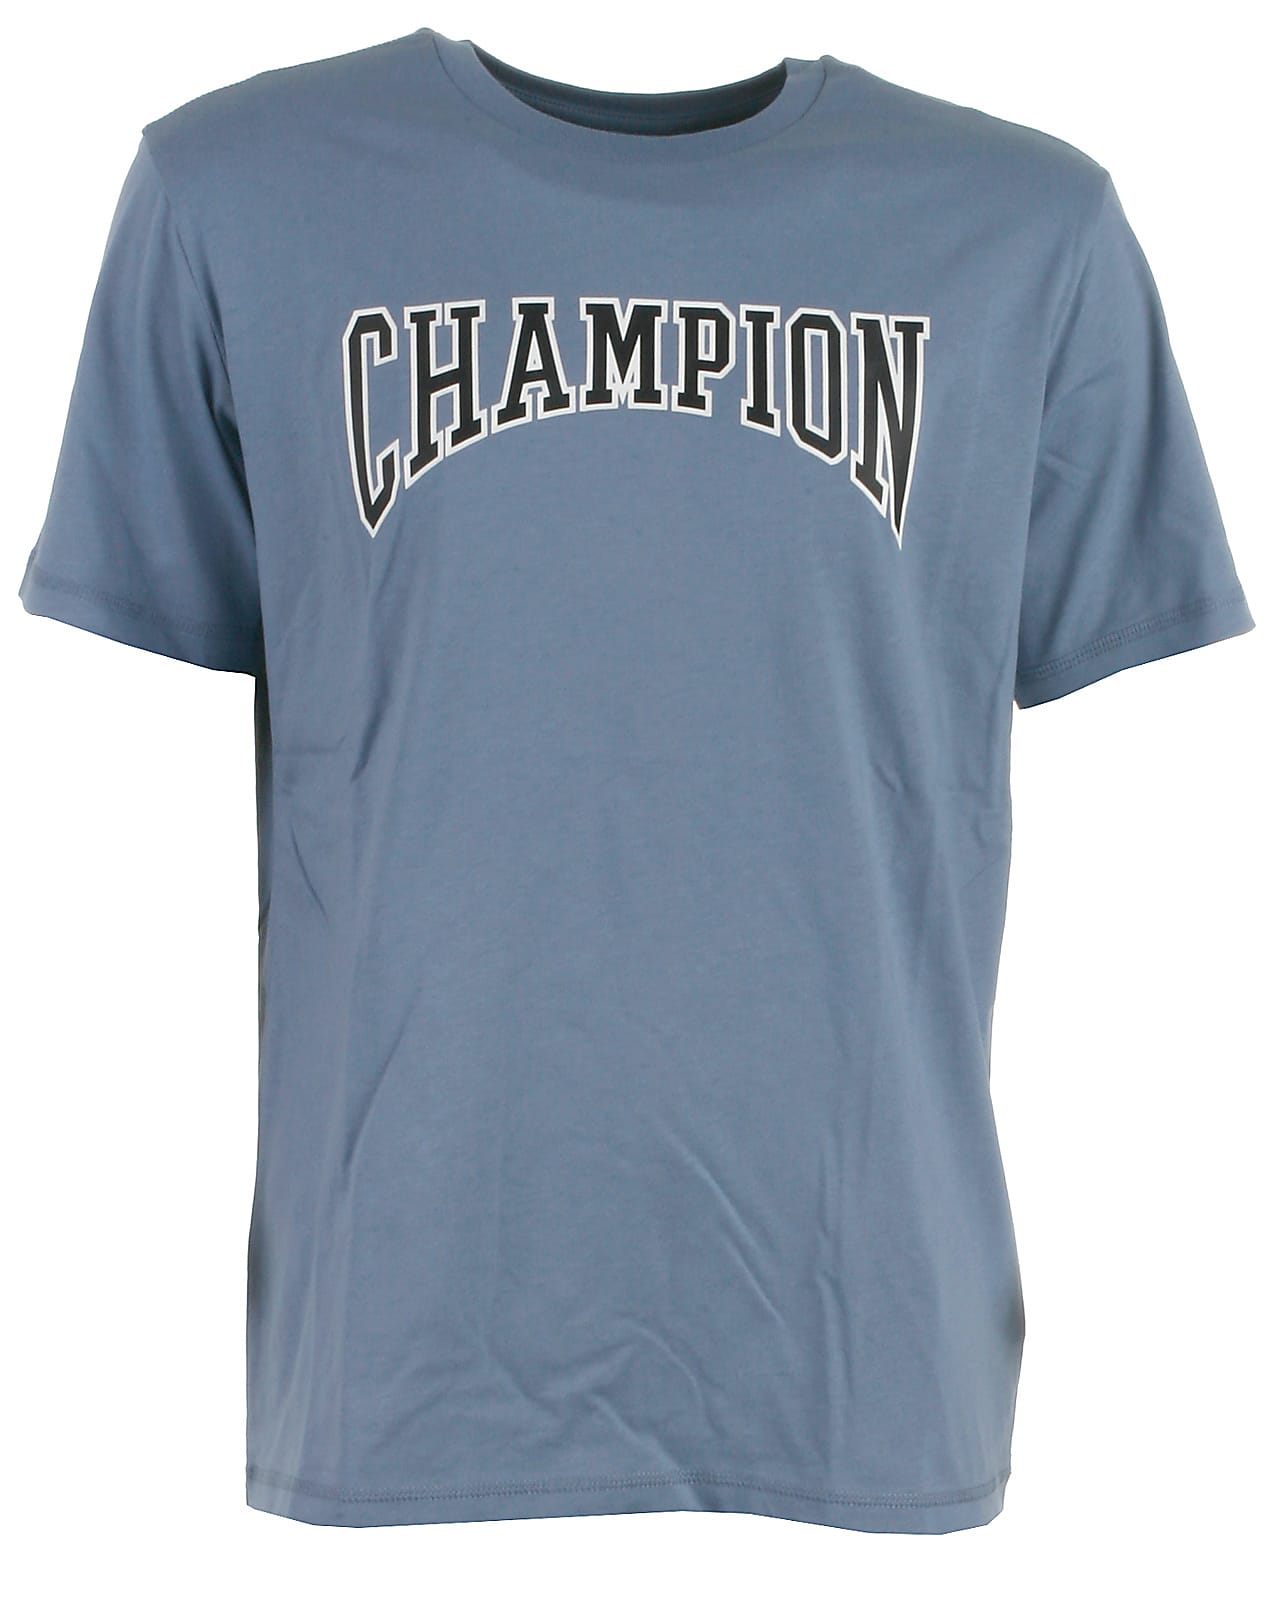 Champion t-shirt s/s